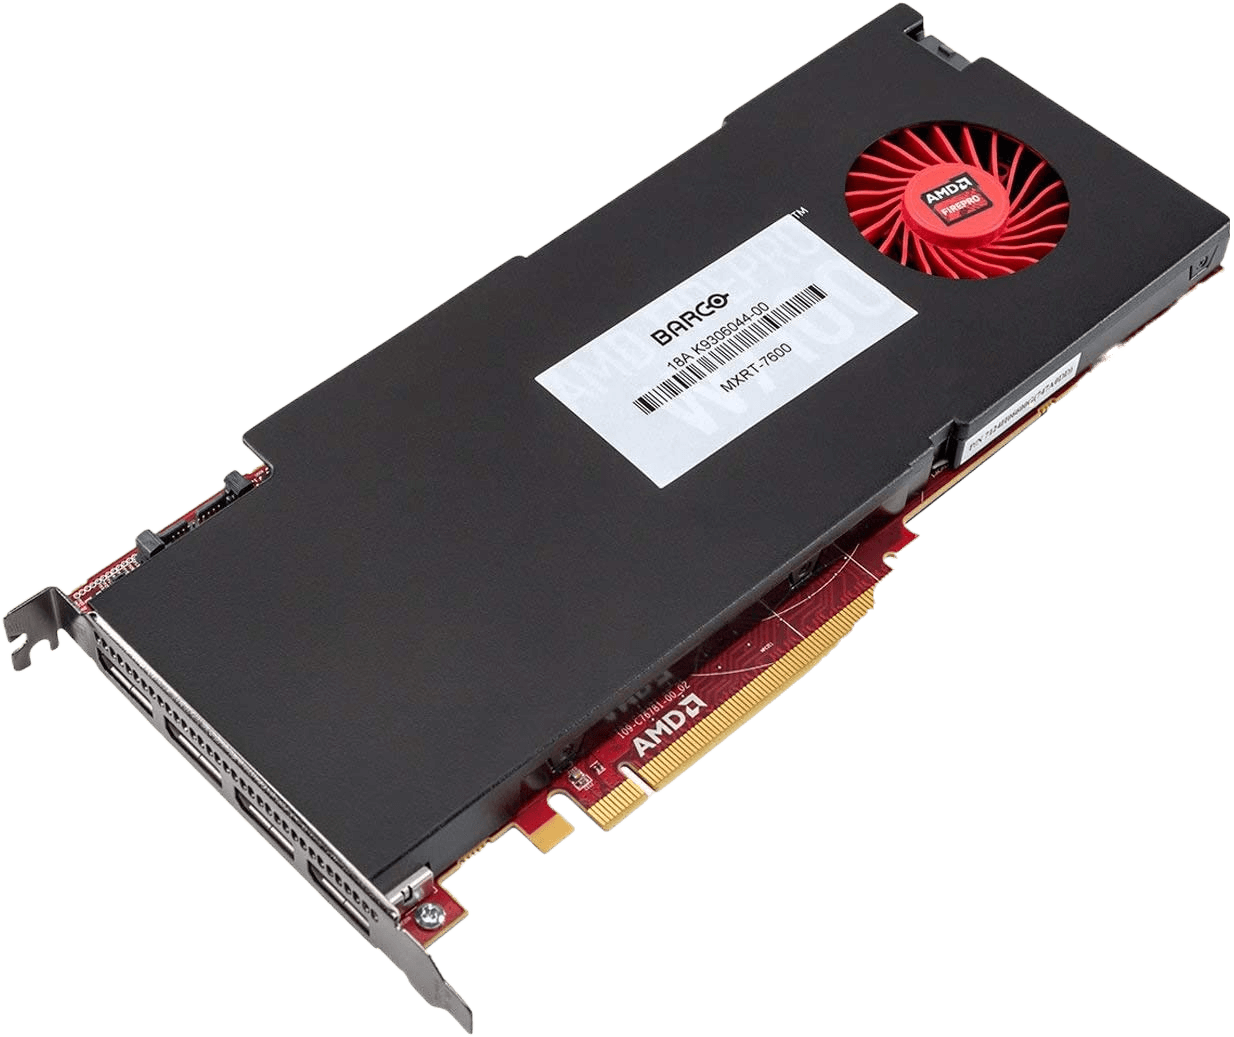 AMD MXRT-7600 8GB AMD Firepro Quad Head PCIe Video Graphics Card Controller K9306044